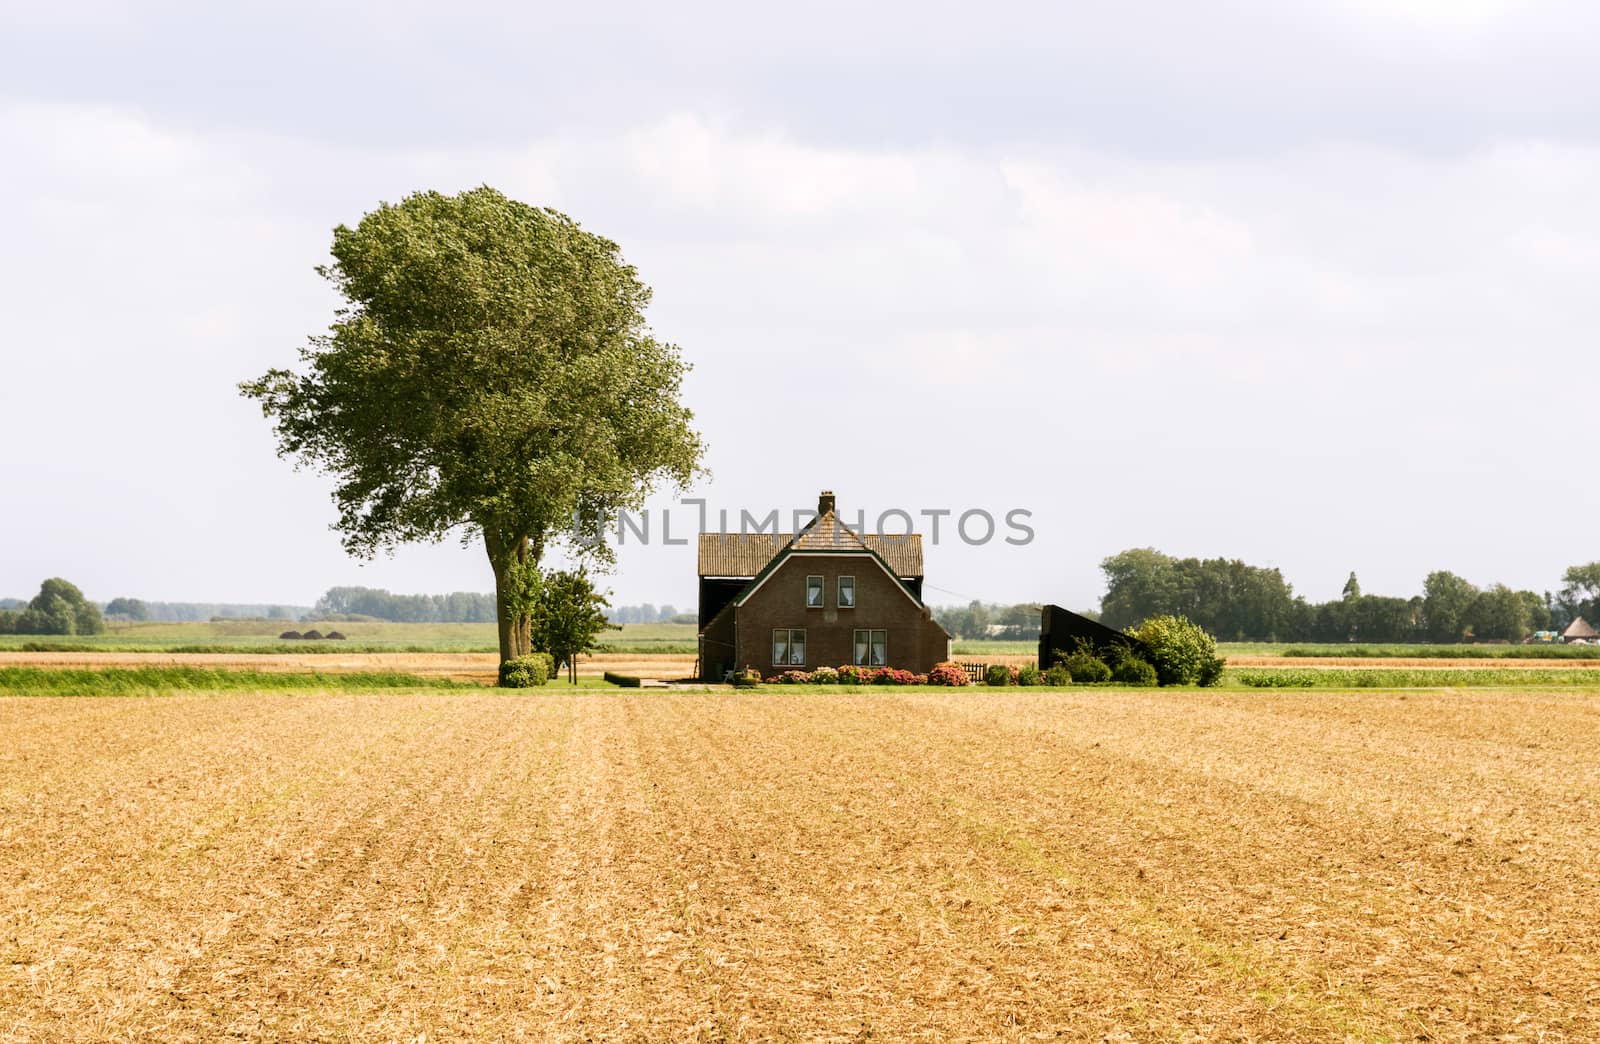 farm in field netherlands by compuinfoto